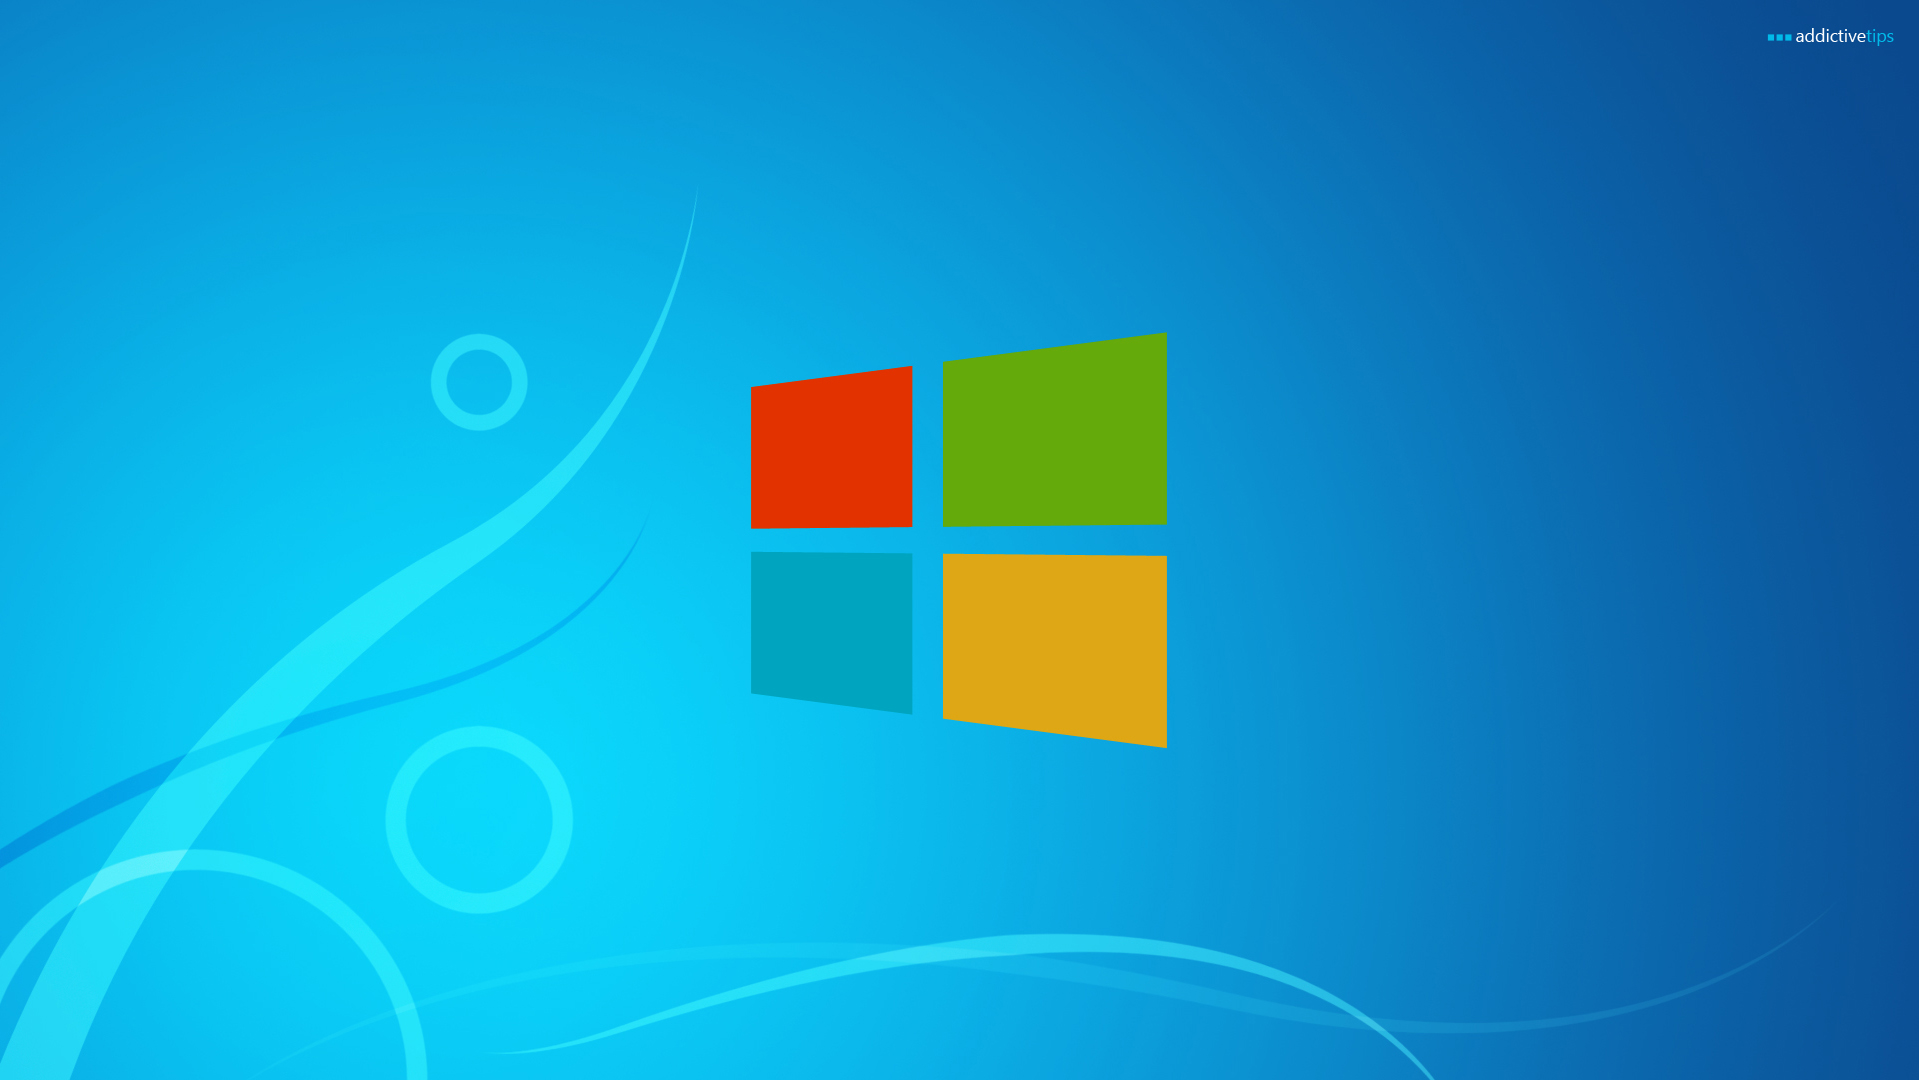 Windows 8 Wallpaper Windows 7 Spinoff White 2 1jpg 1920x1080